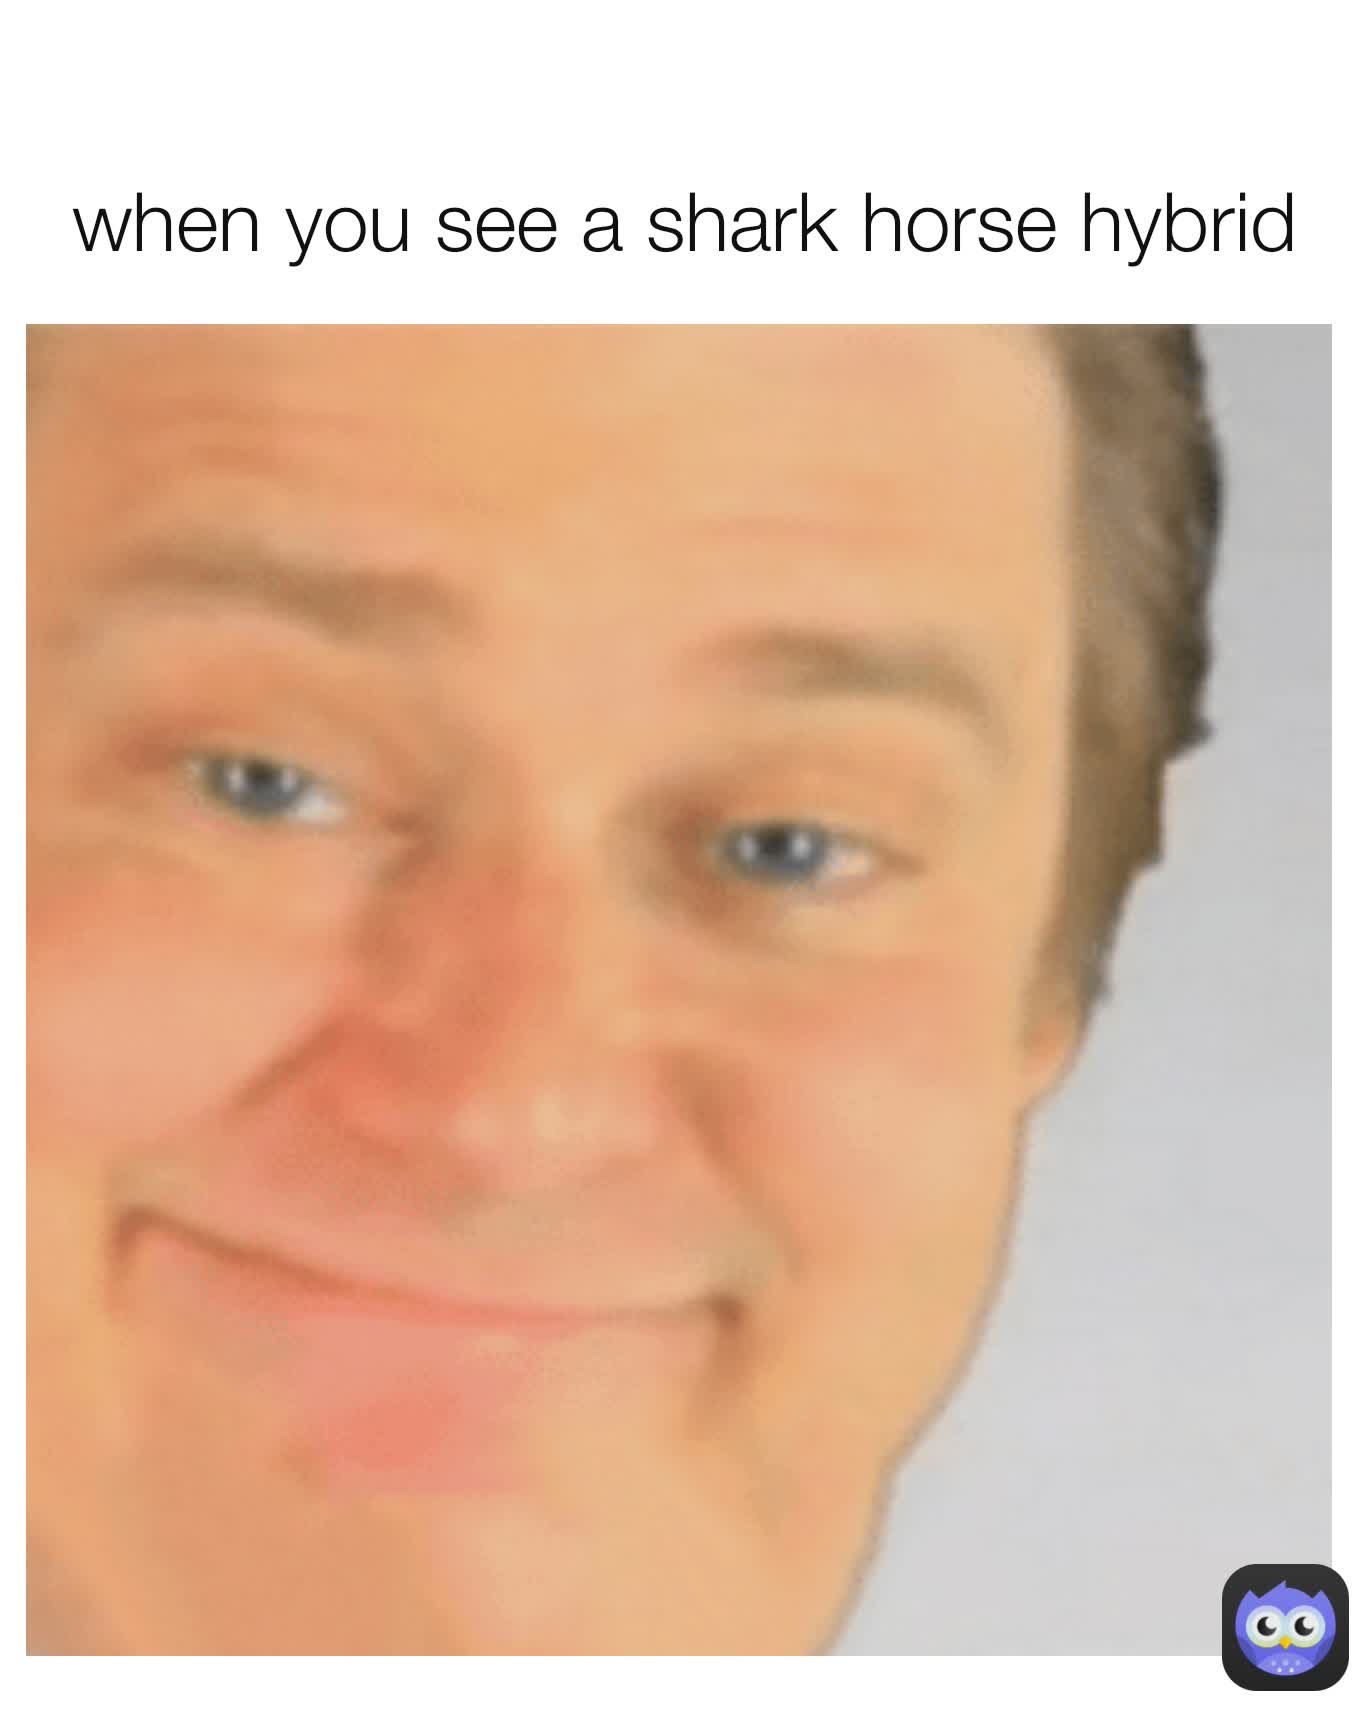 
when you see a shark horse hybrid